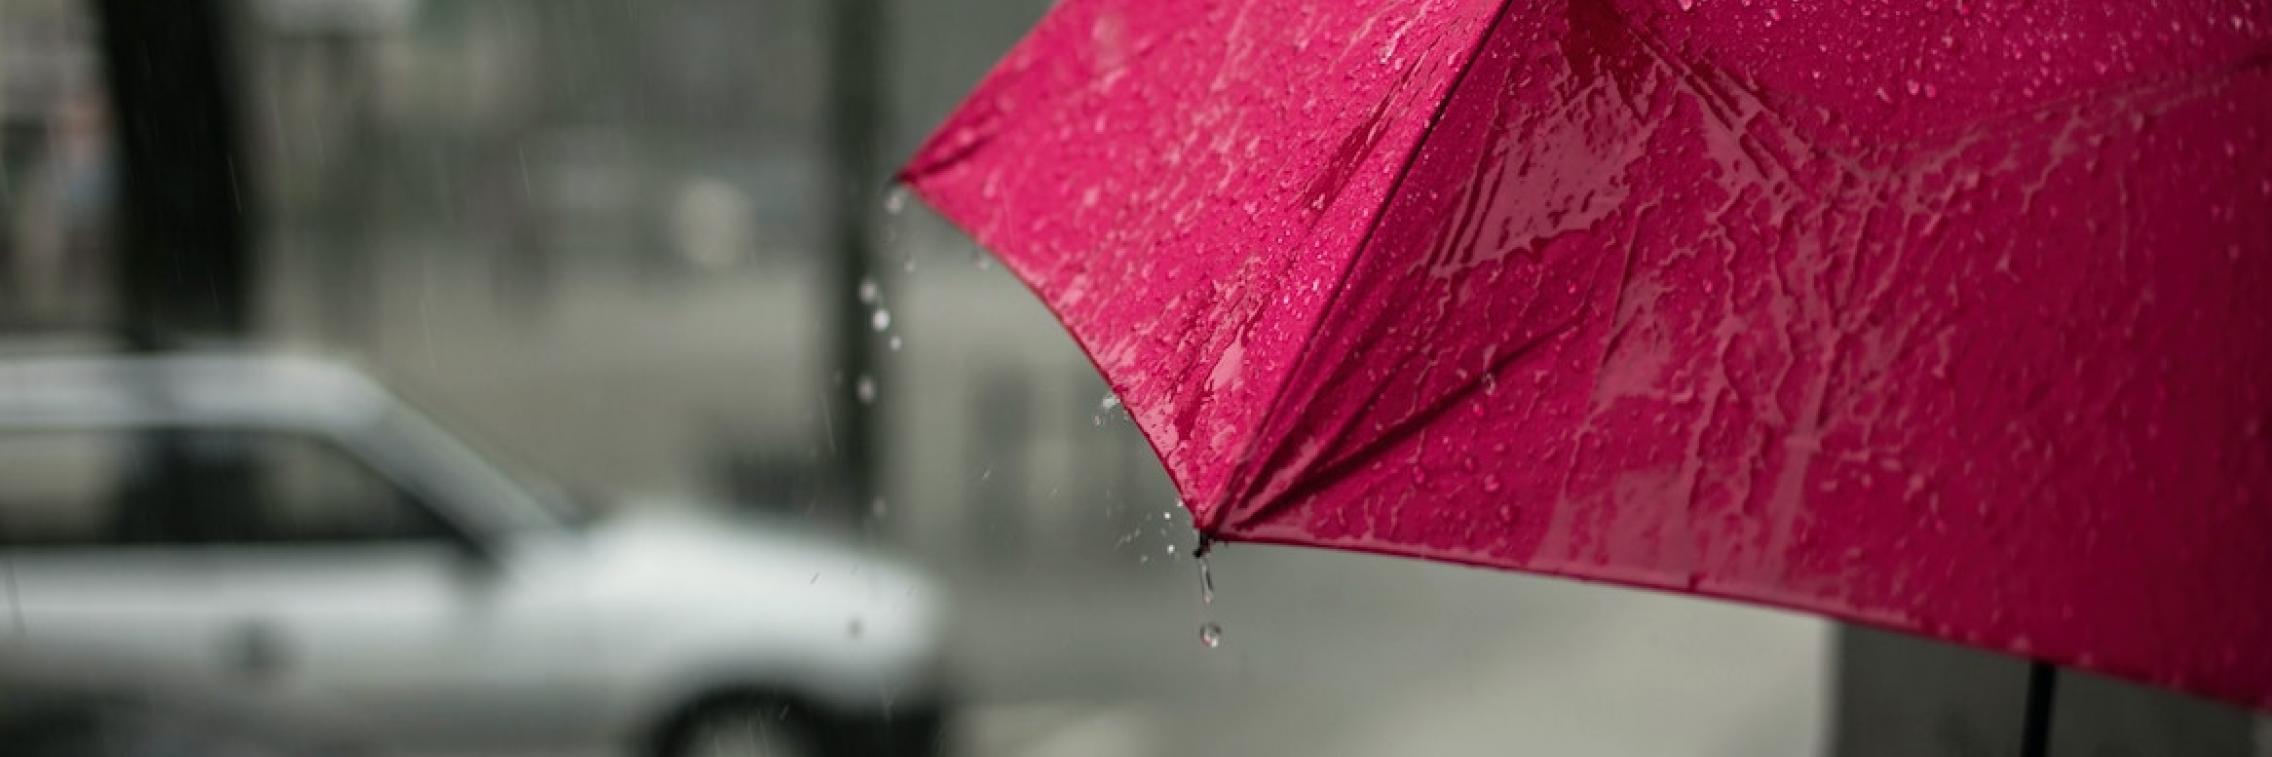 A person holding an umbrella in the rain.